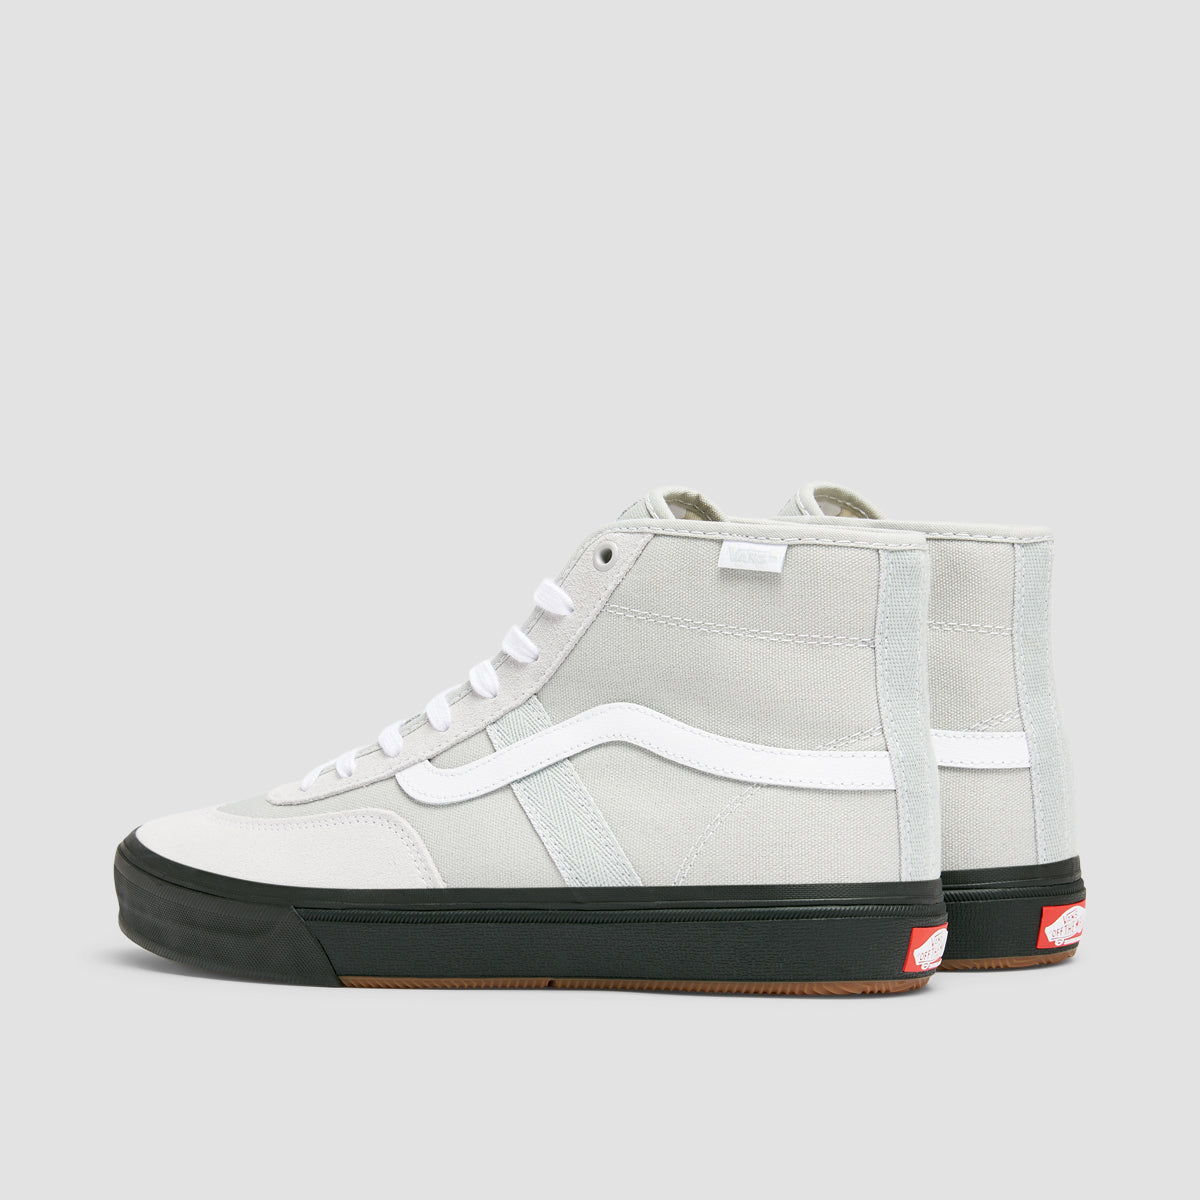 Vans Crockett High Top Shoes - Light Grey/Black